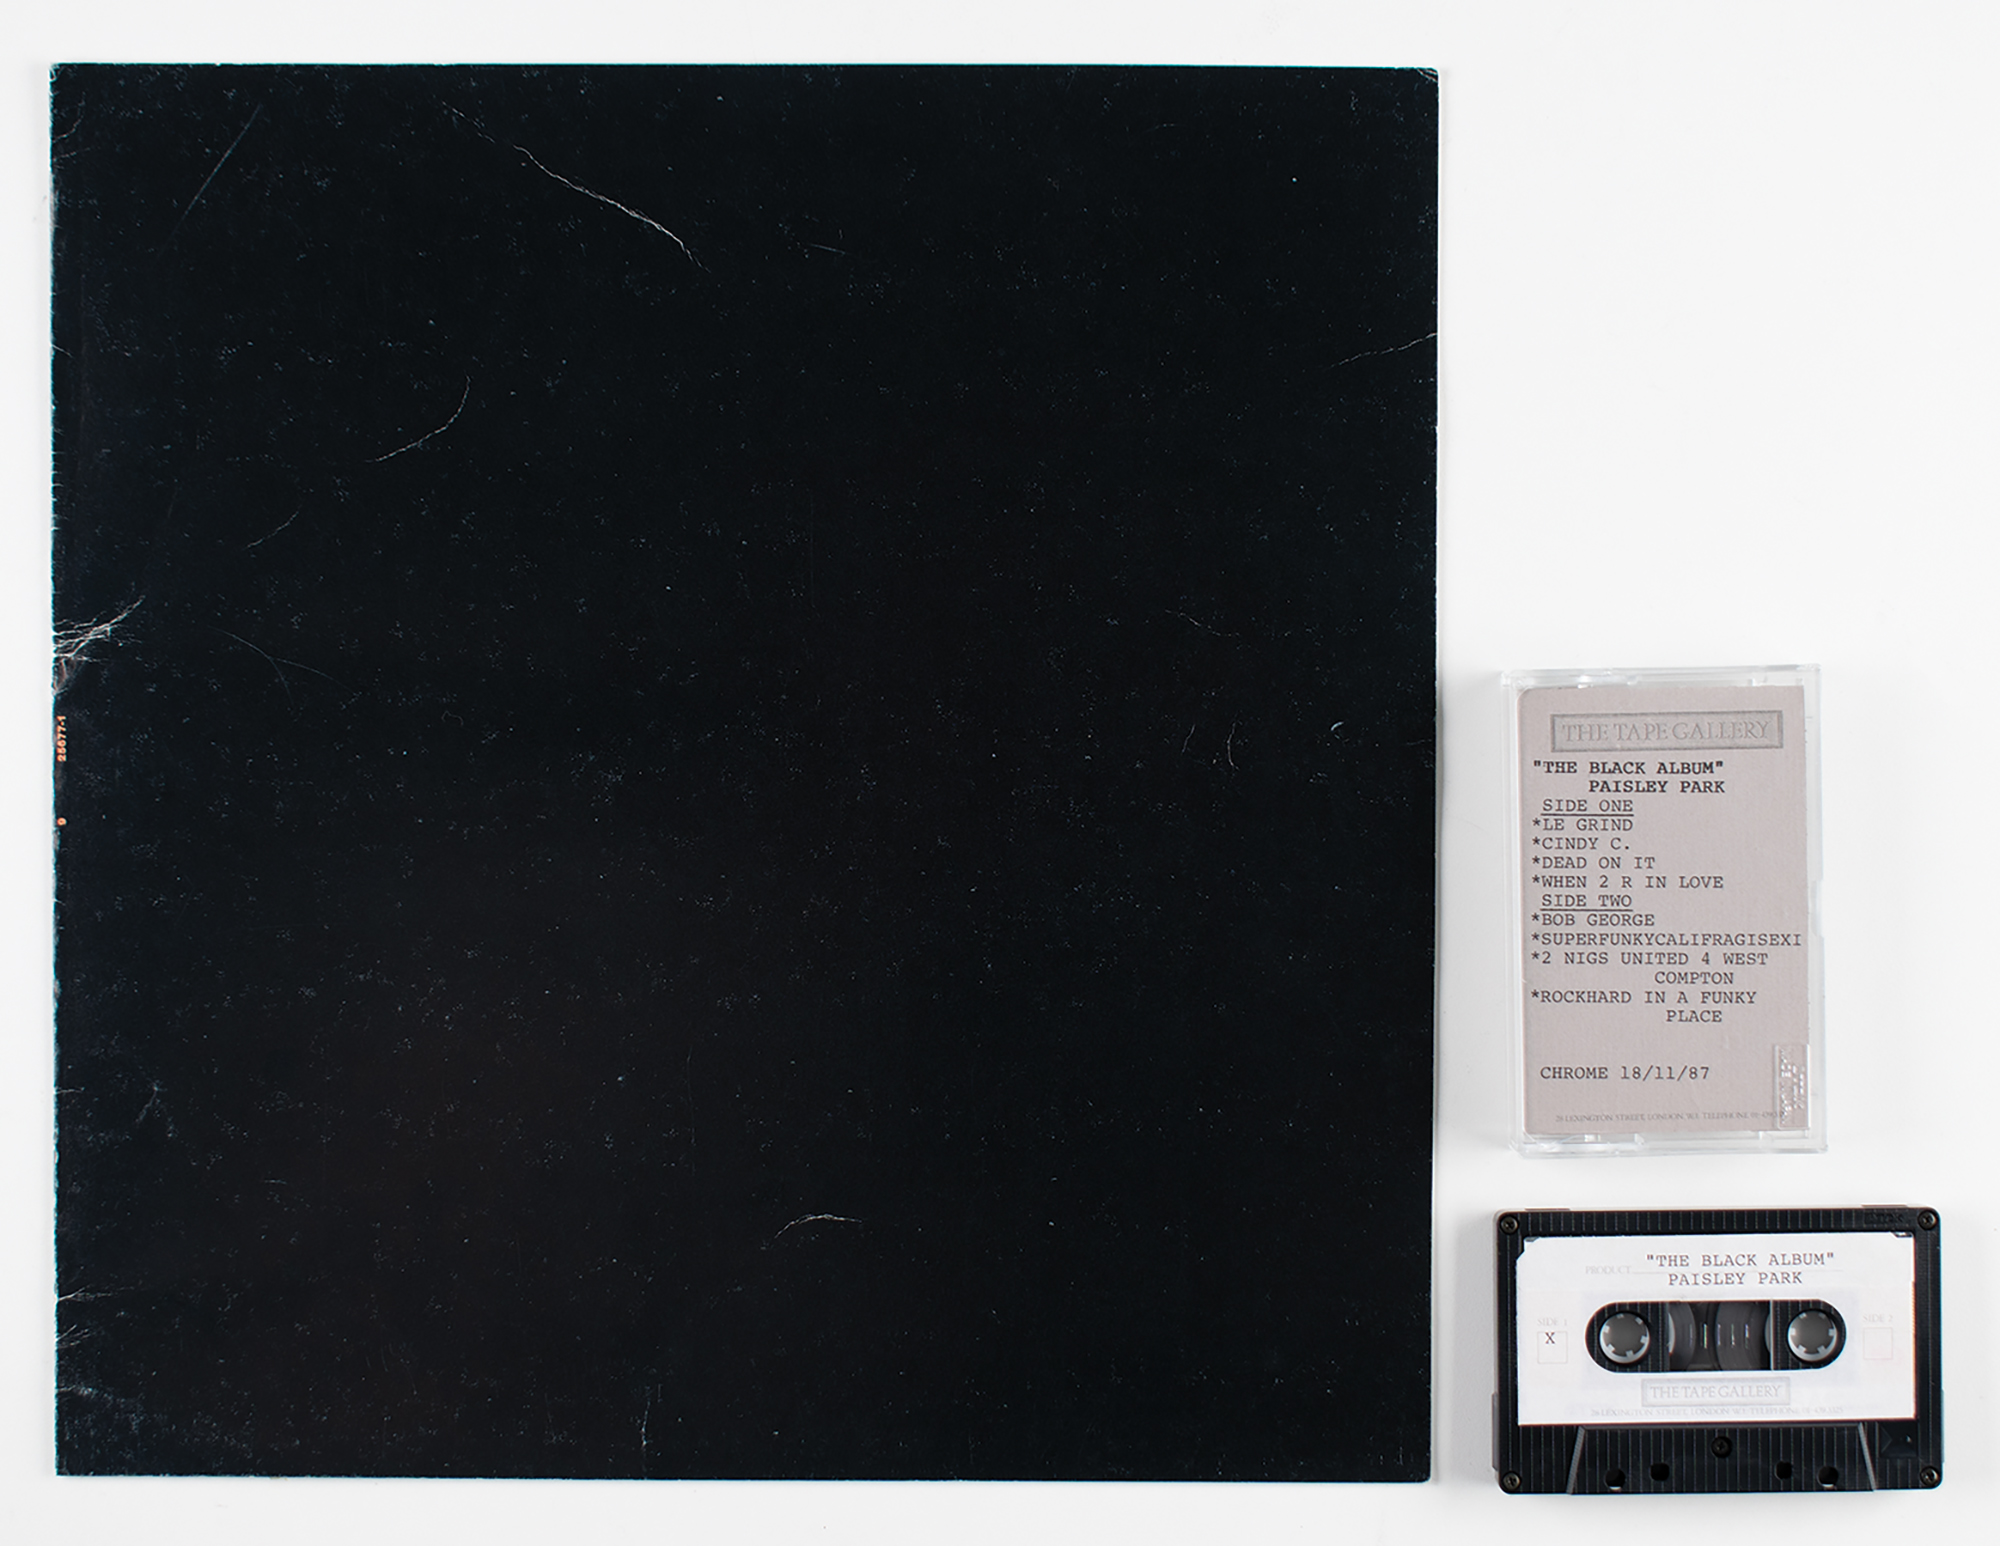 Lot #738 Prince: 1987 Black Album UK Promo Cassette and Sleeve - Image 1